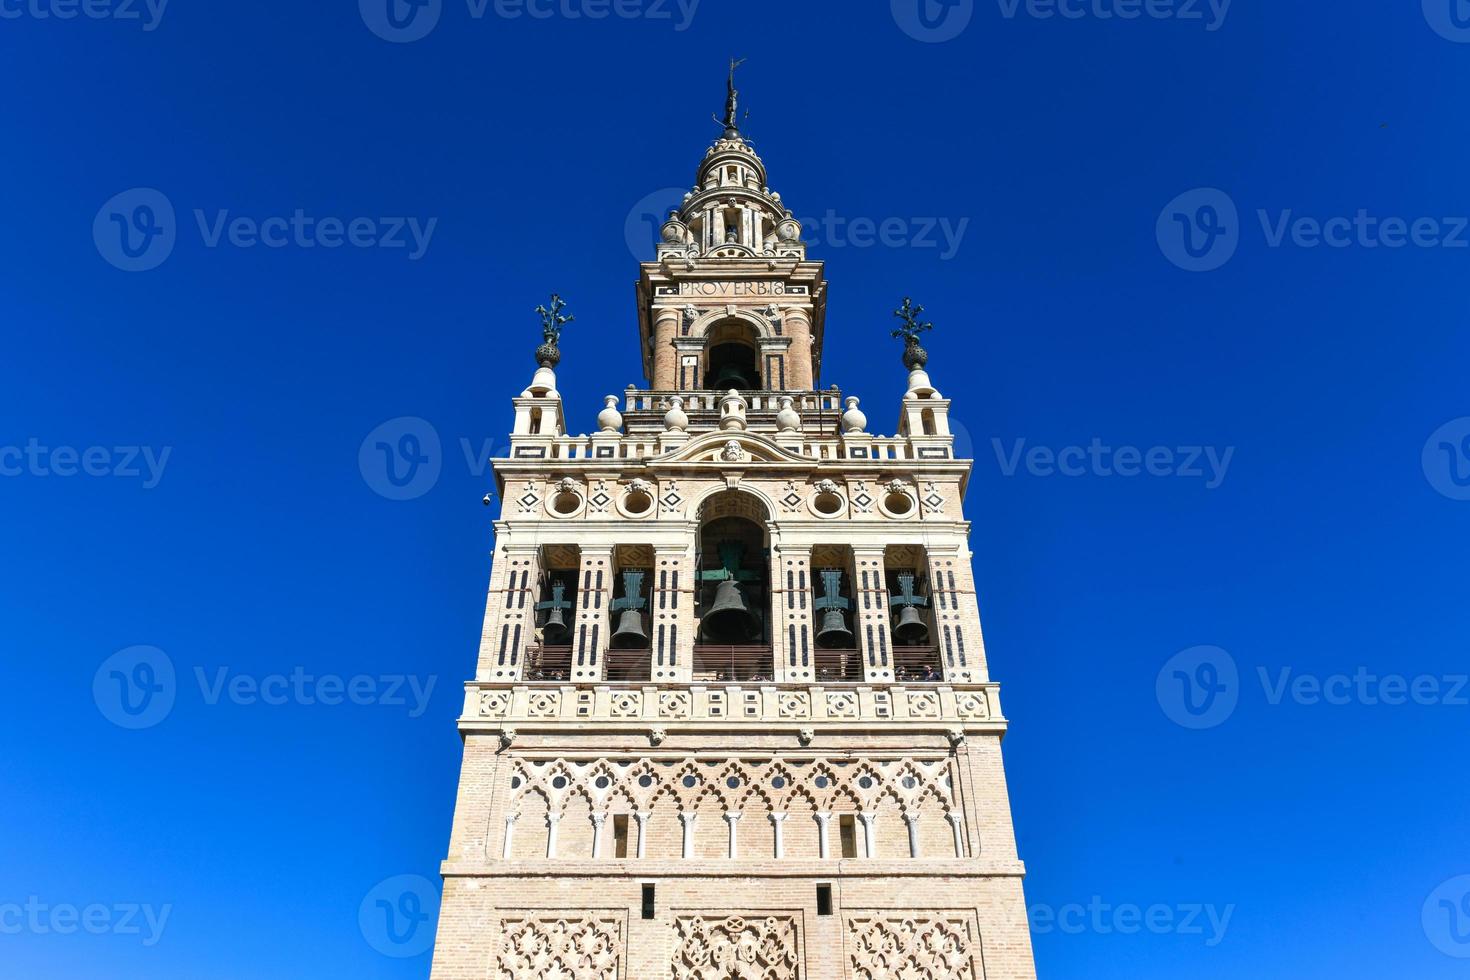 la giralda, klok toren van de Sevilla kathedraal in Spanje. foto